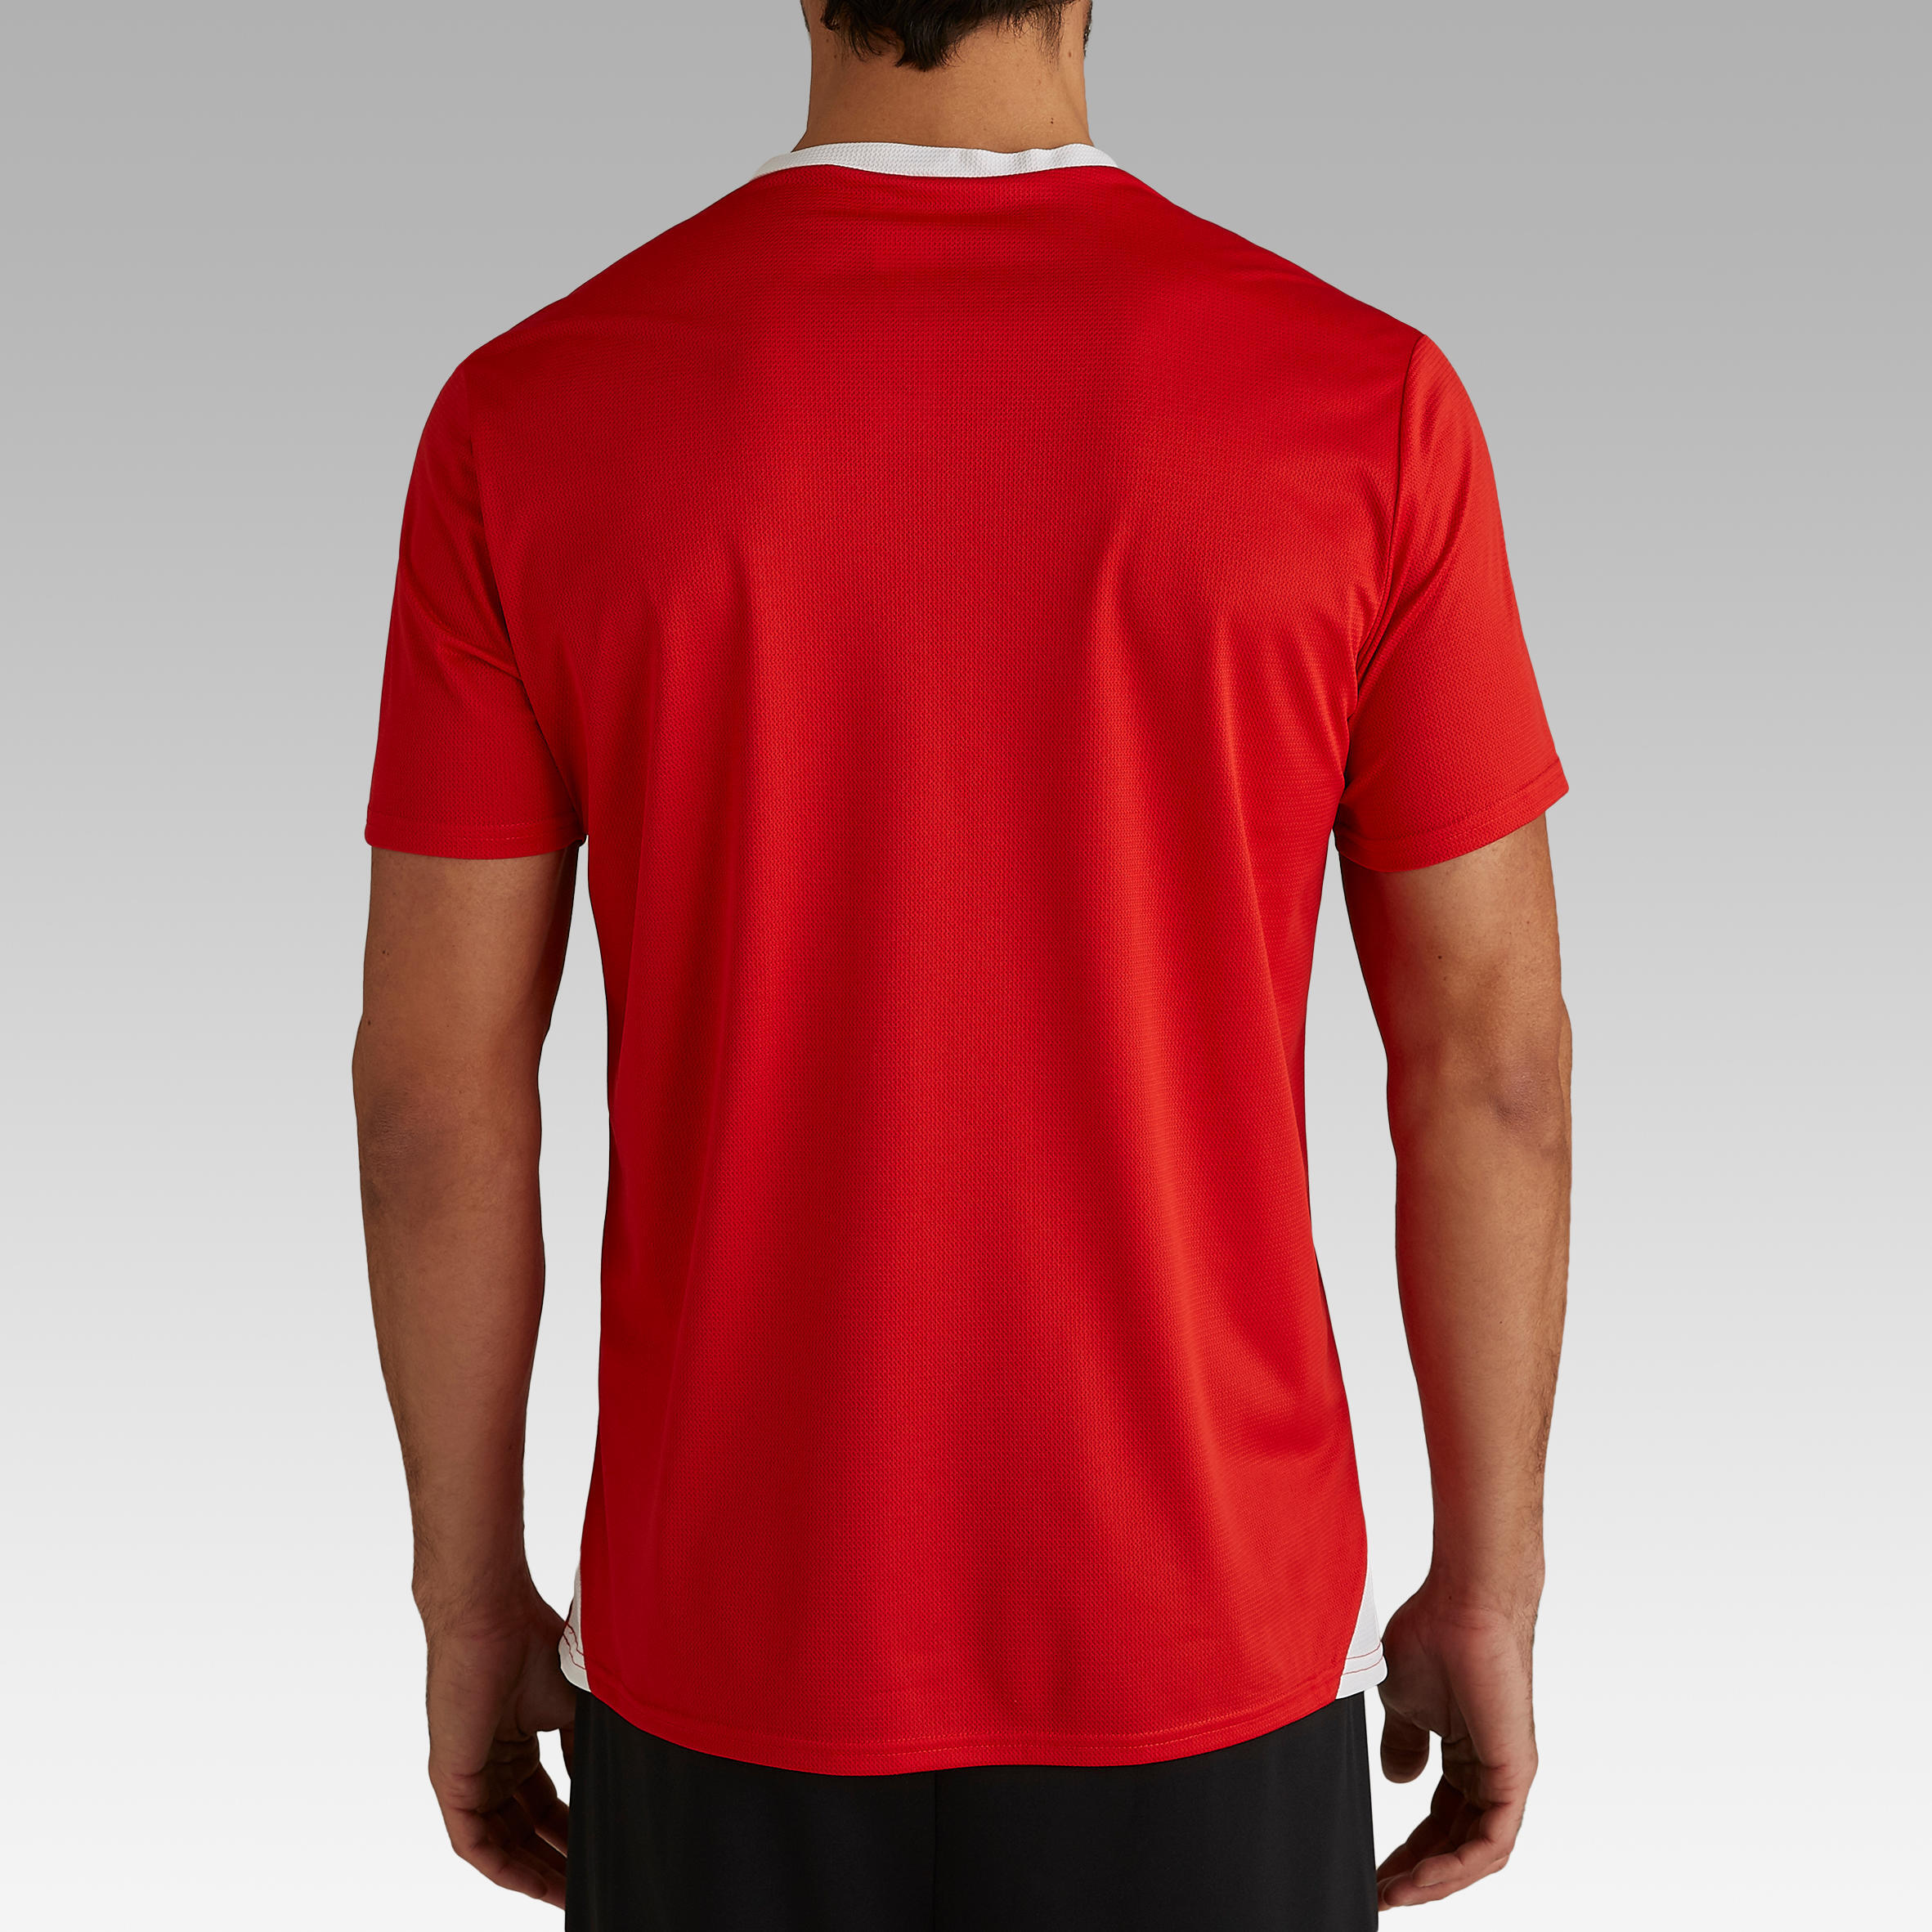 Adult Football Shirt Essential Club - Red 21/34